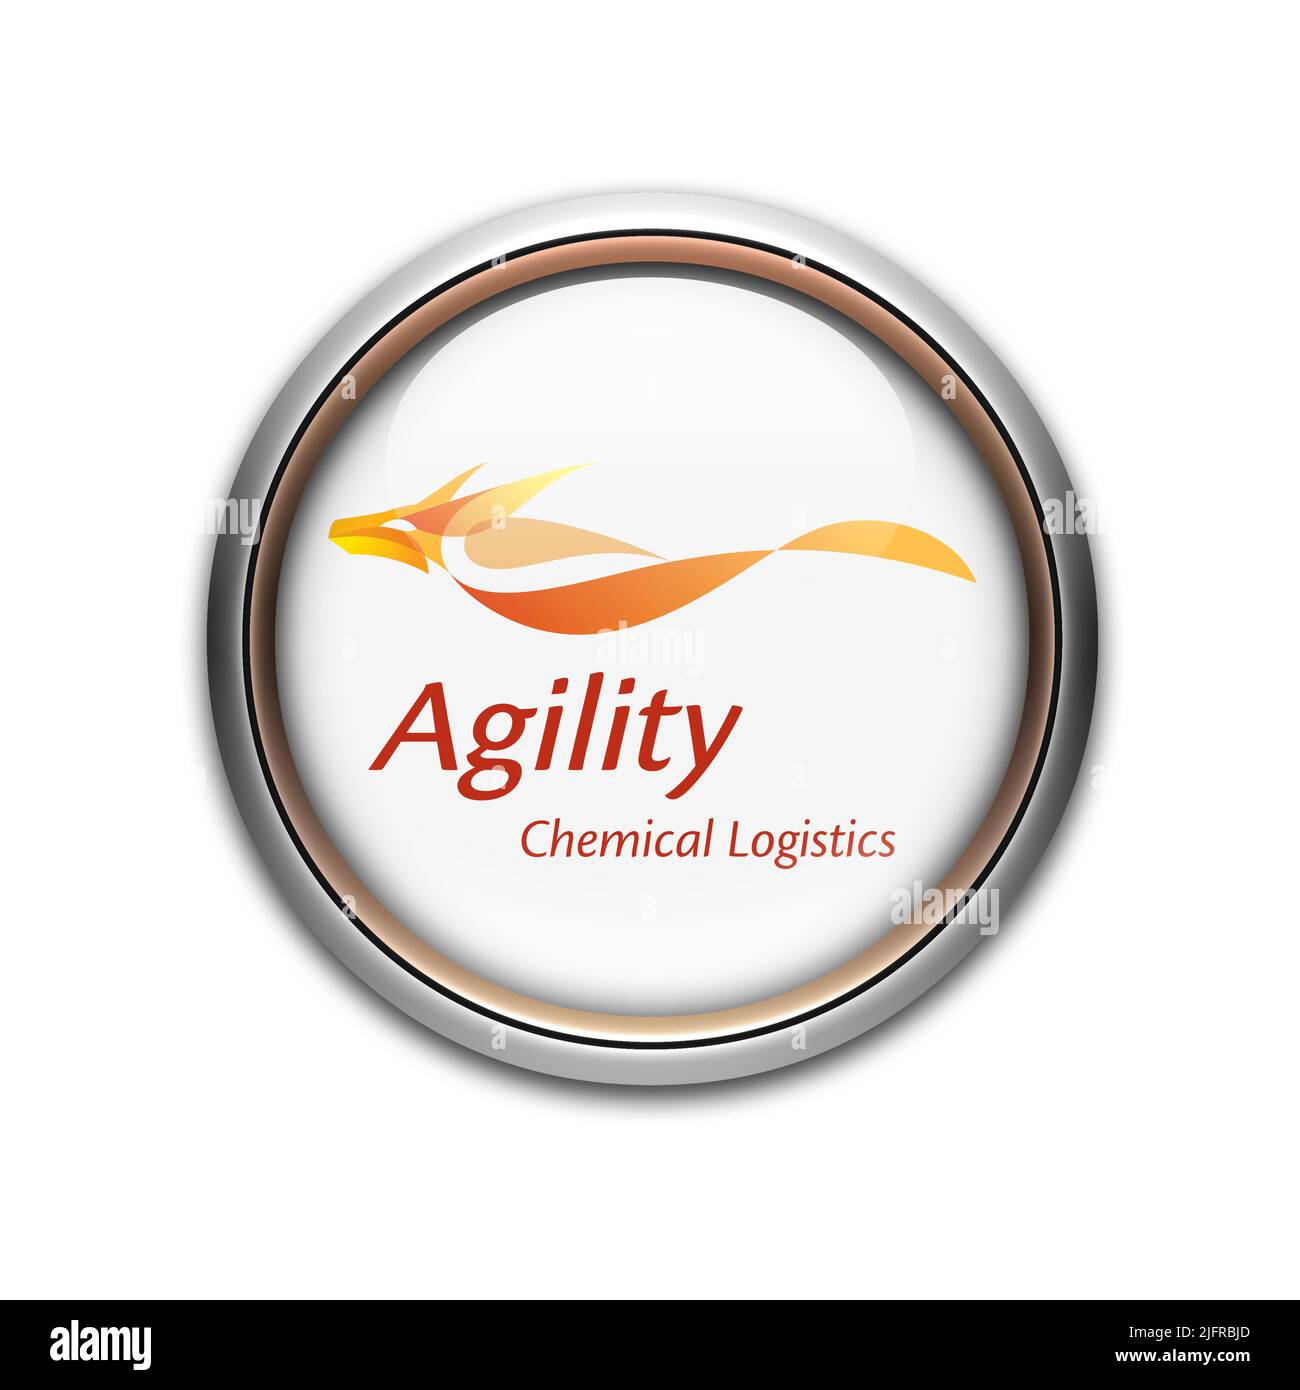 Agility Chemical Logistic Stock Photo